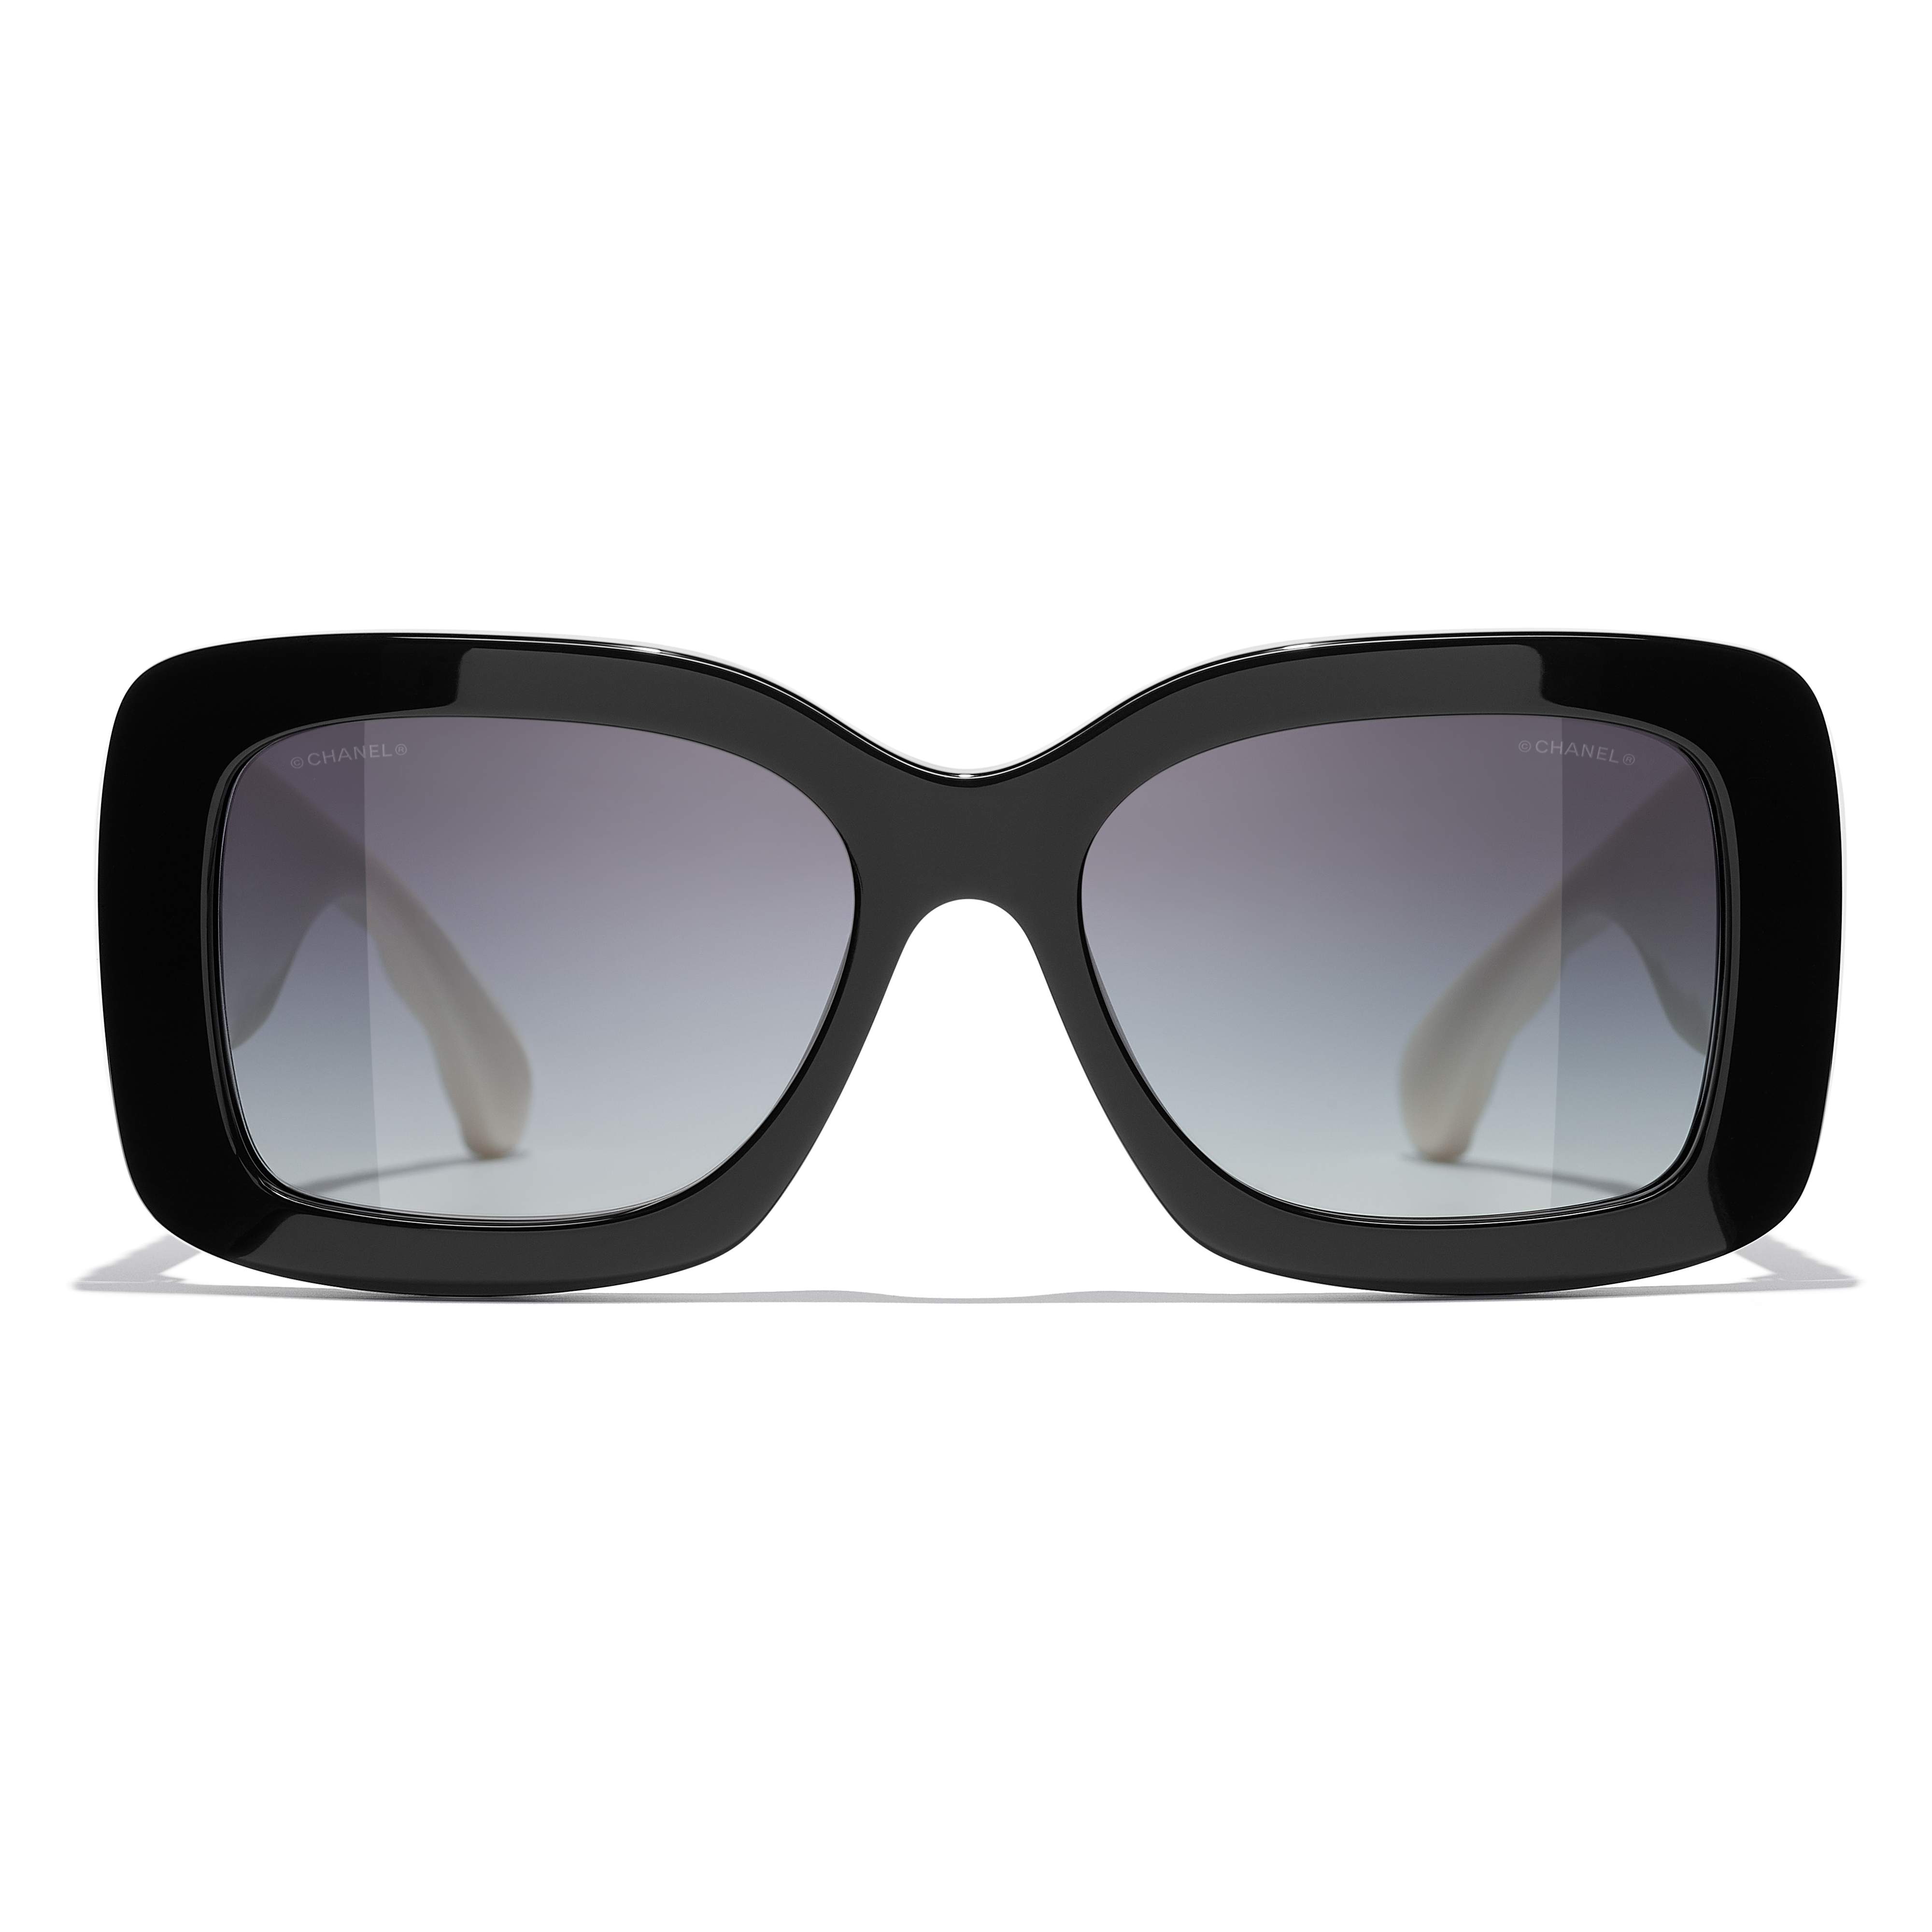 rectangular chanel sunglasses